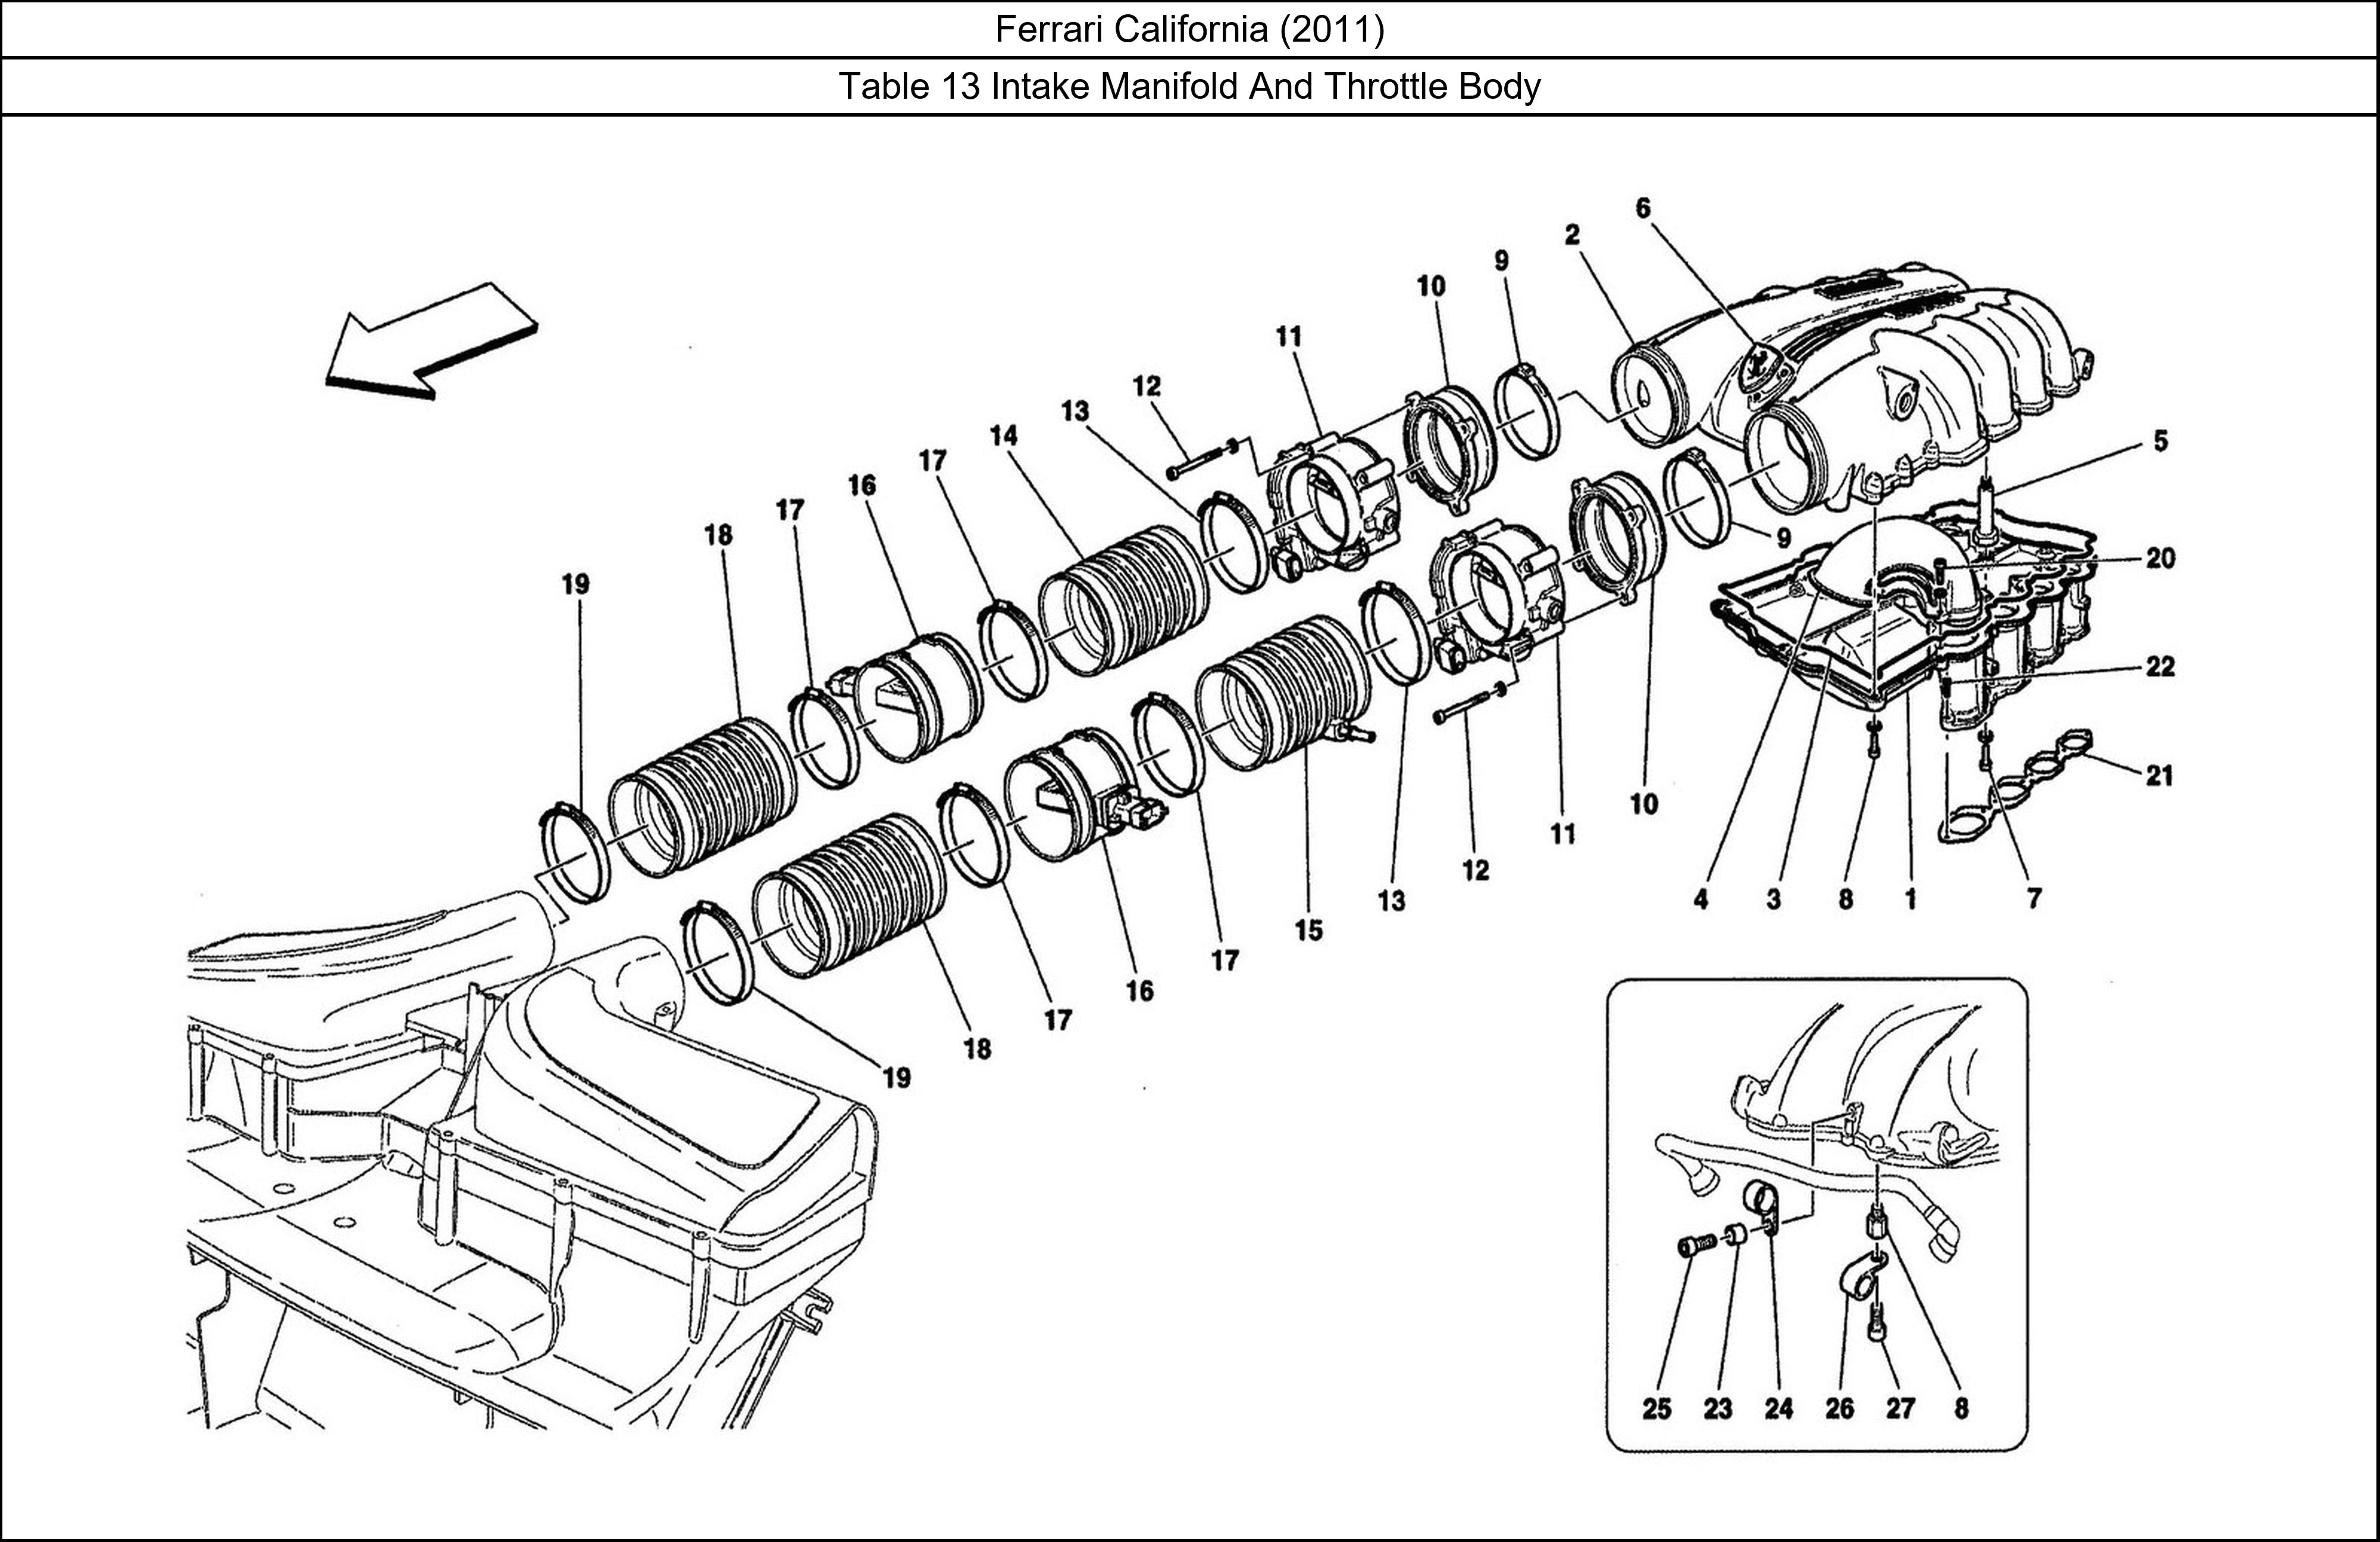 Ferrari Parts Ferrari California (2011) Table 13 Intake Manifold And Throttle Body